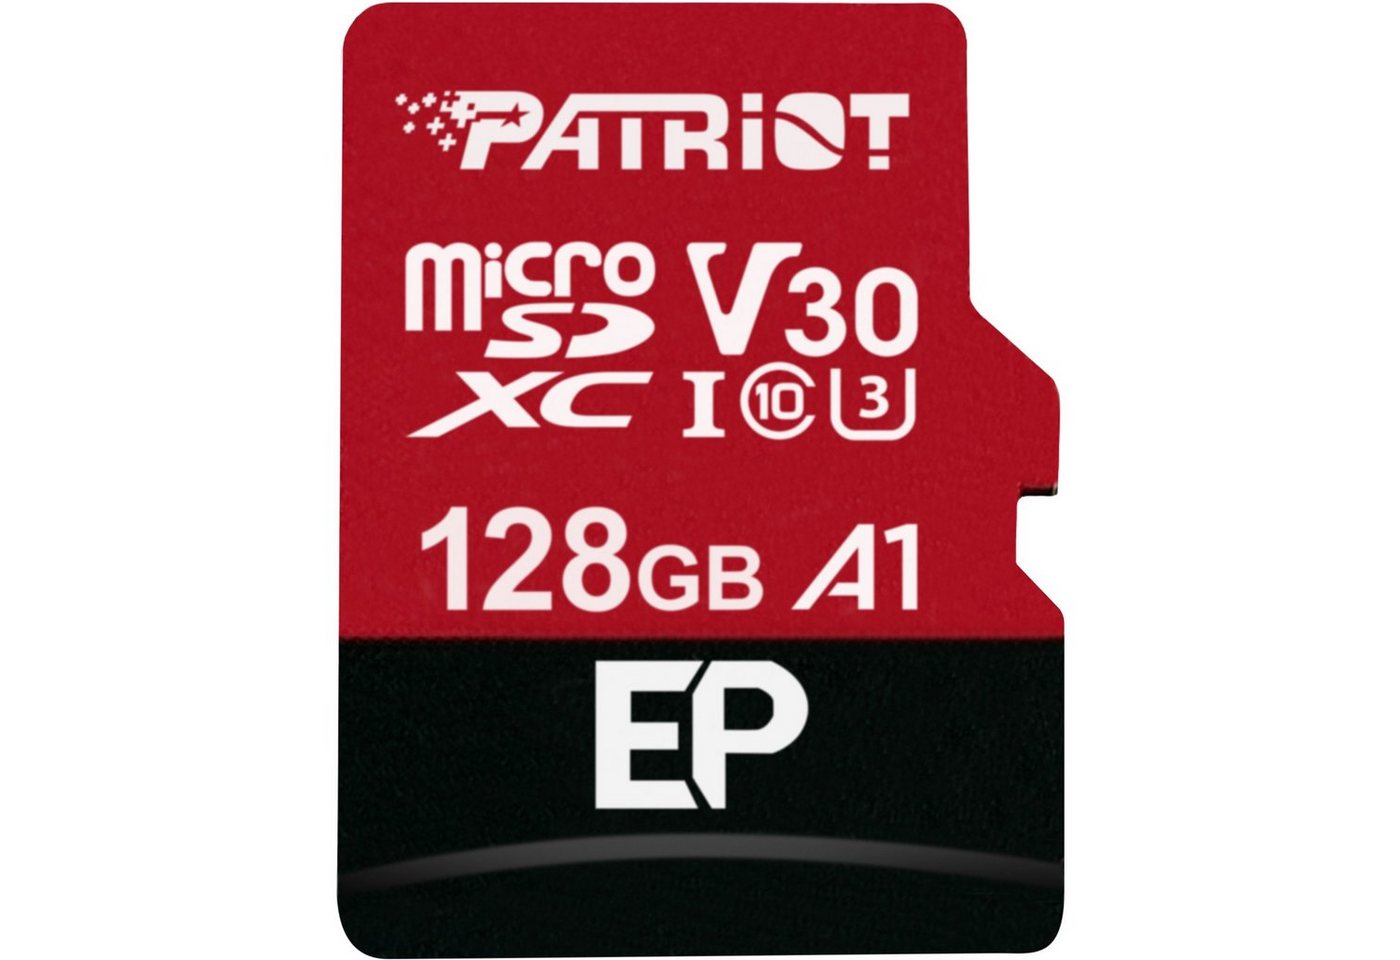 Patriot EP 128 GB microSDXC Speicherkarte von Patriot